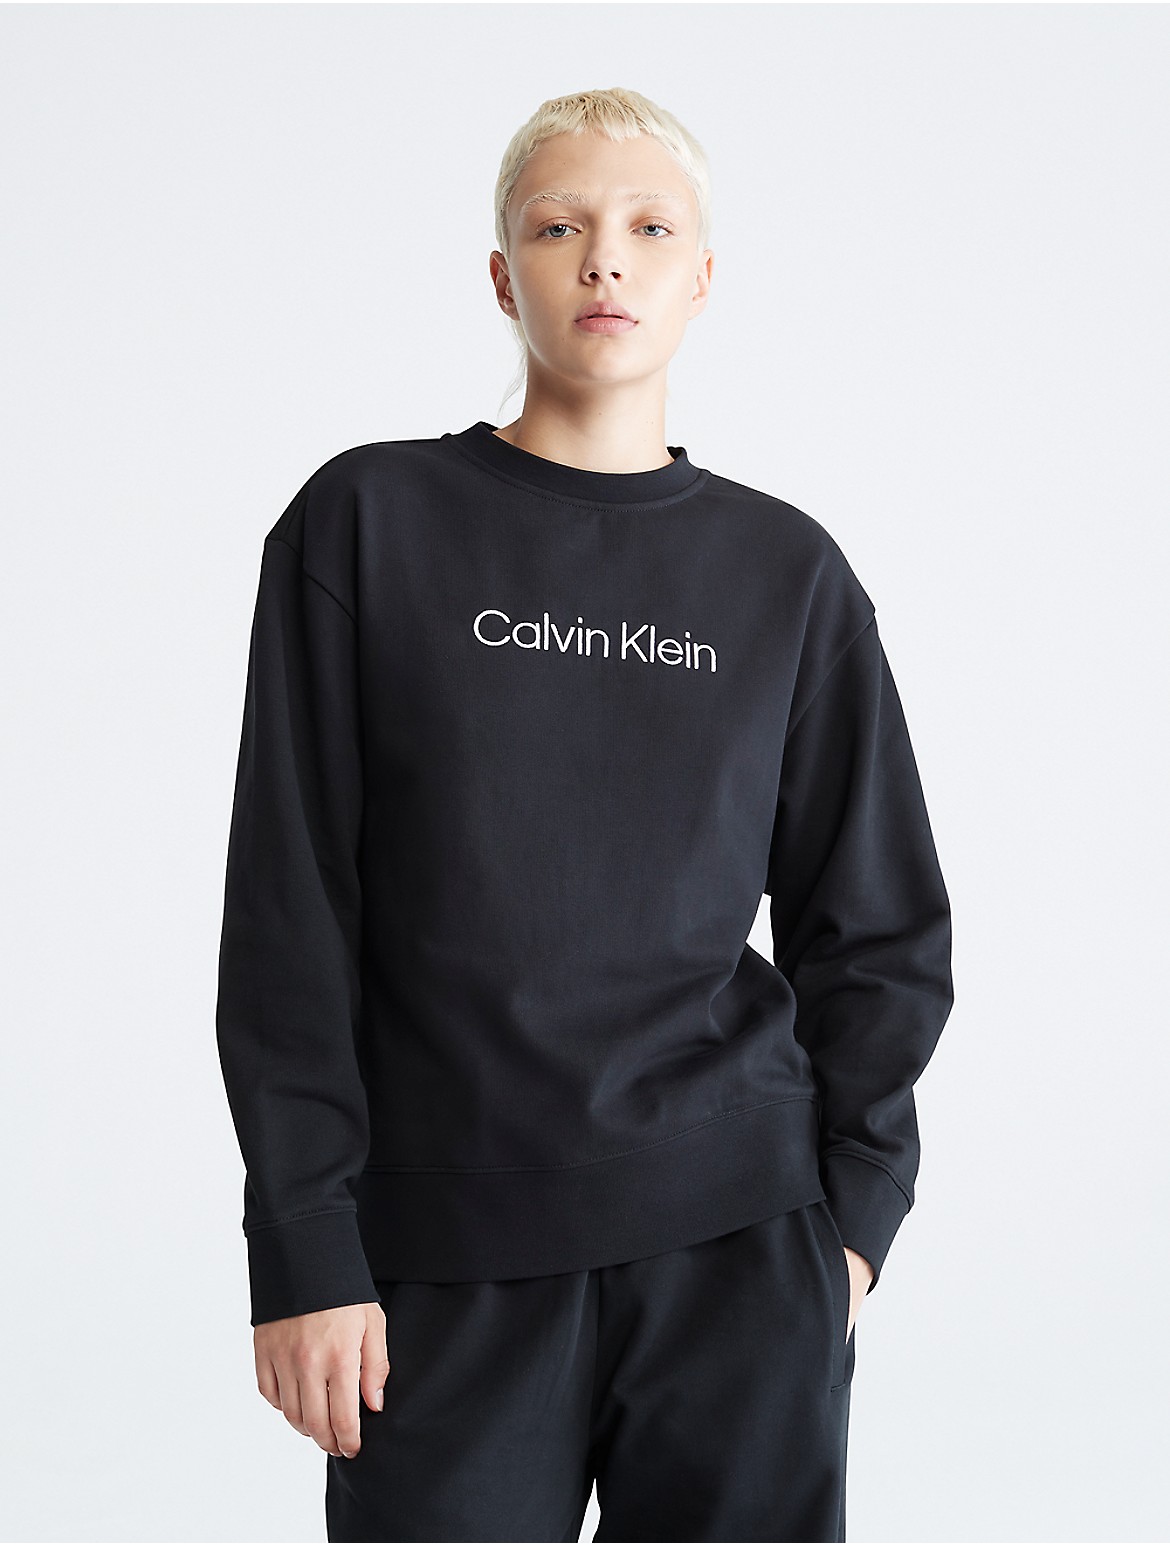 Calvin Klein Women's Relaxed Fit Standard Logo Crewneck Sweatshirt - Black - XS